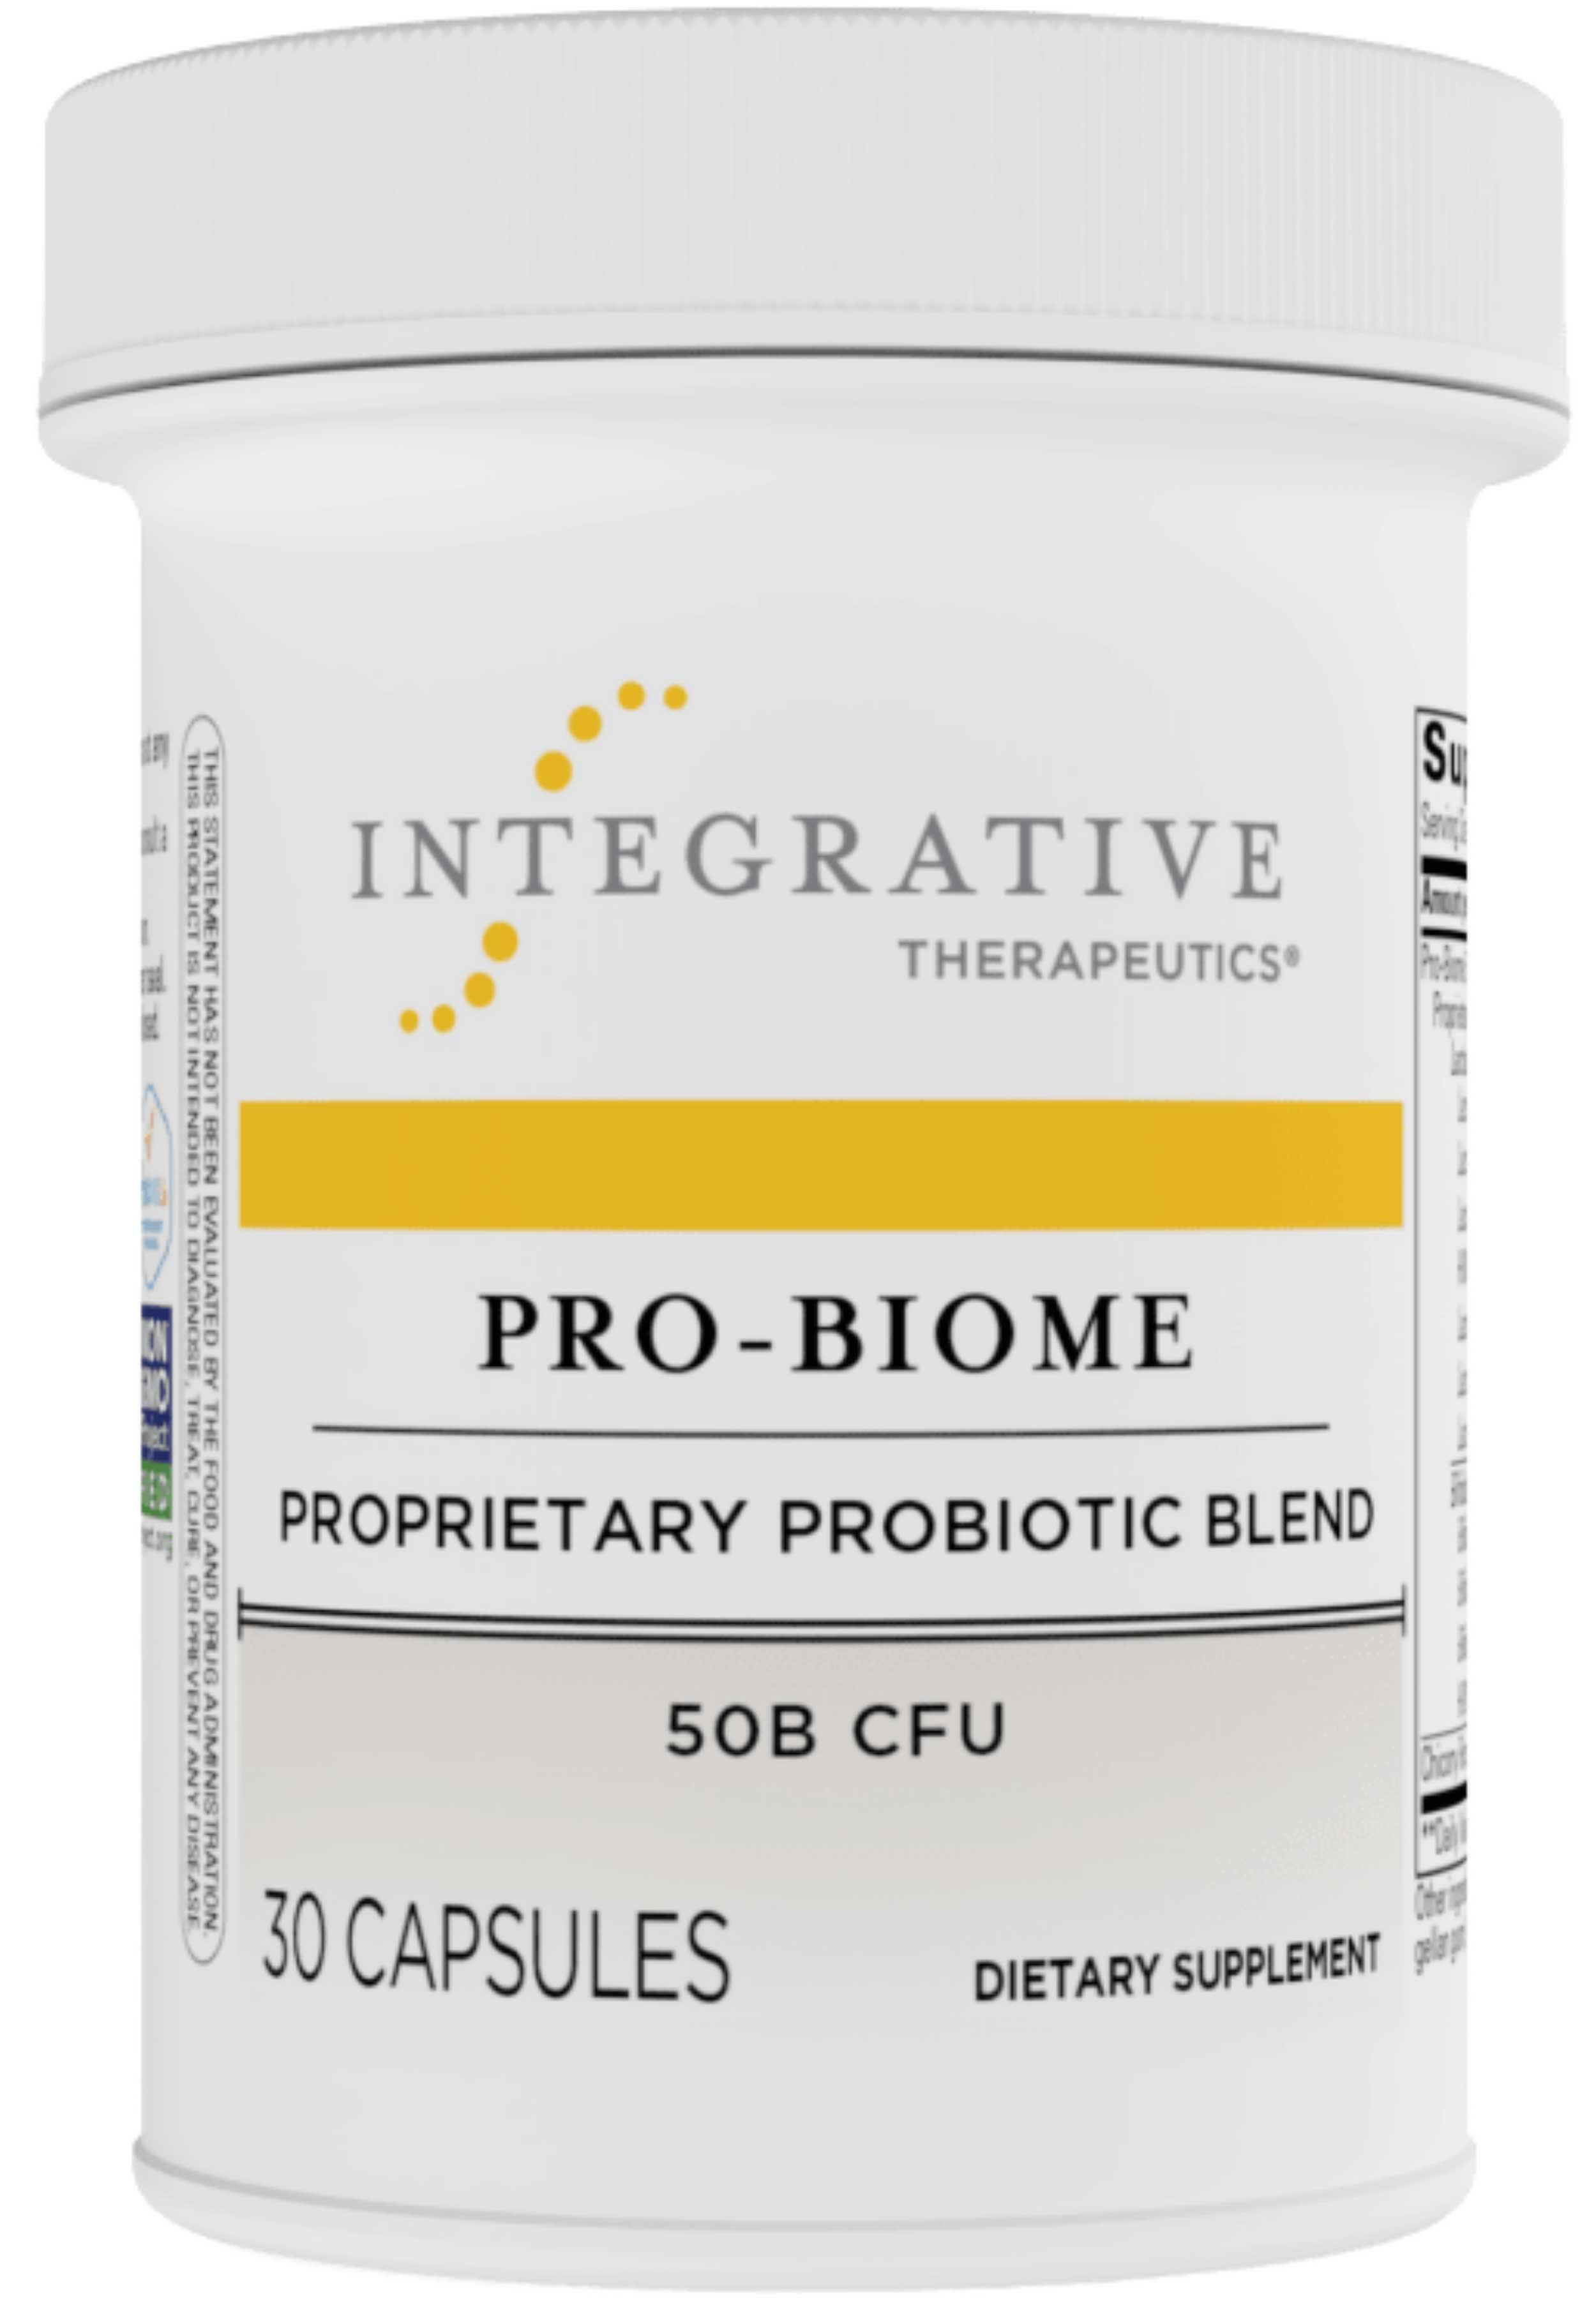 Integrative Therapeutics Pro-Biome 50B CFU - 30 Capsules